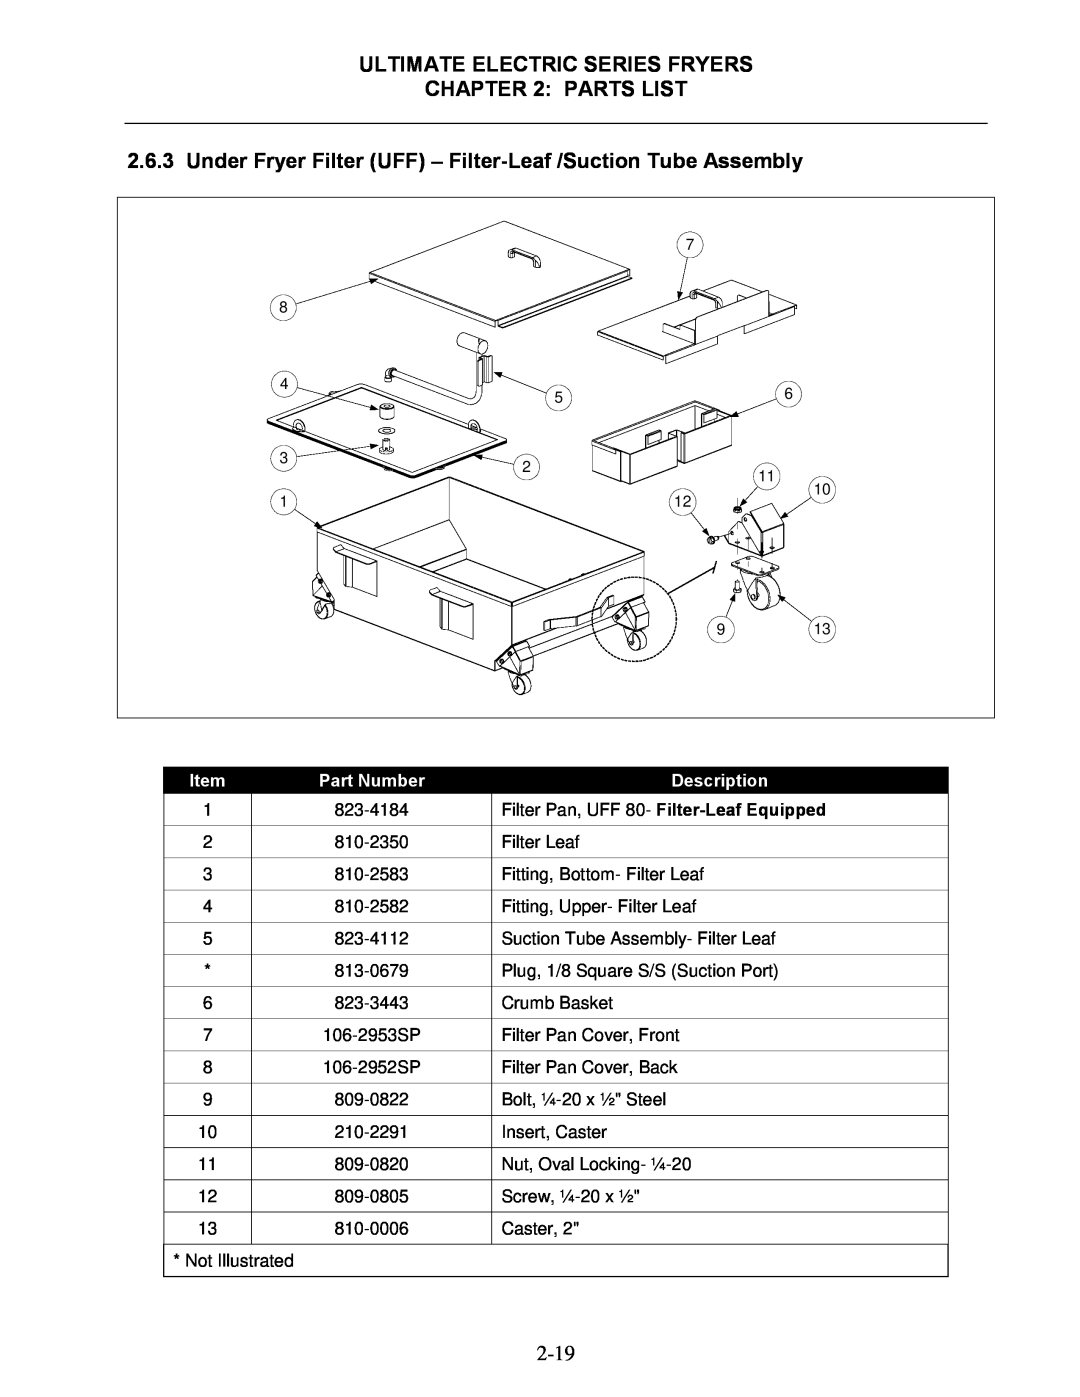 Frymaster manual Ultimate Electric Series Fryers, Parts List, Part Number, Description 